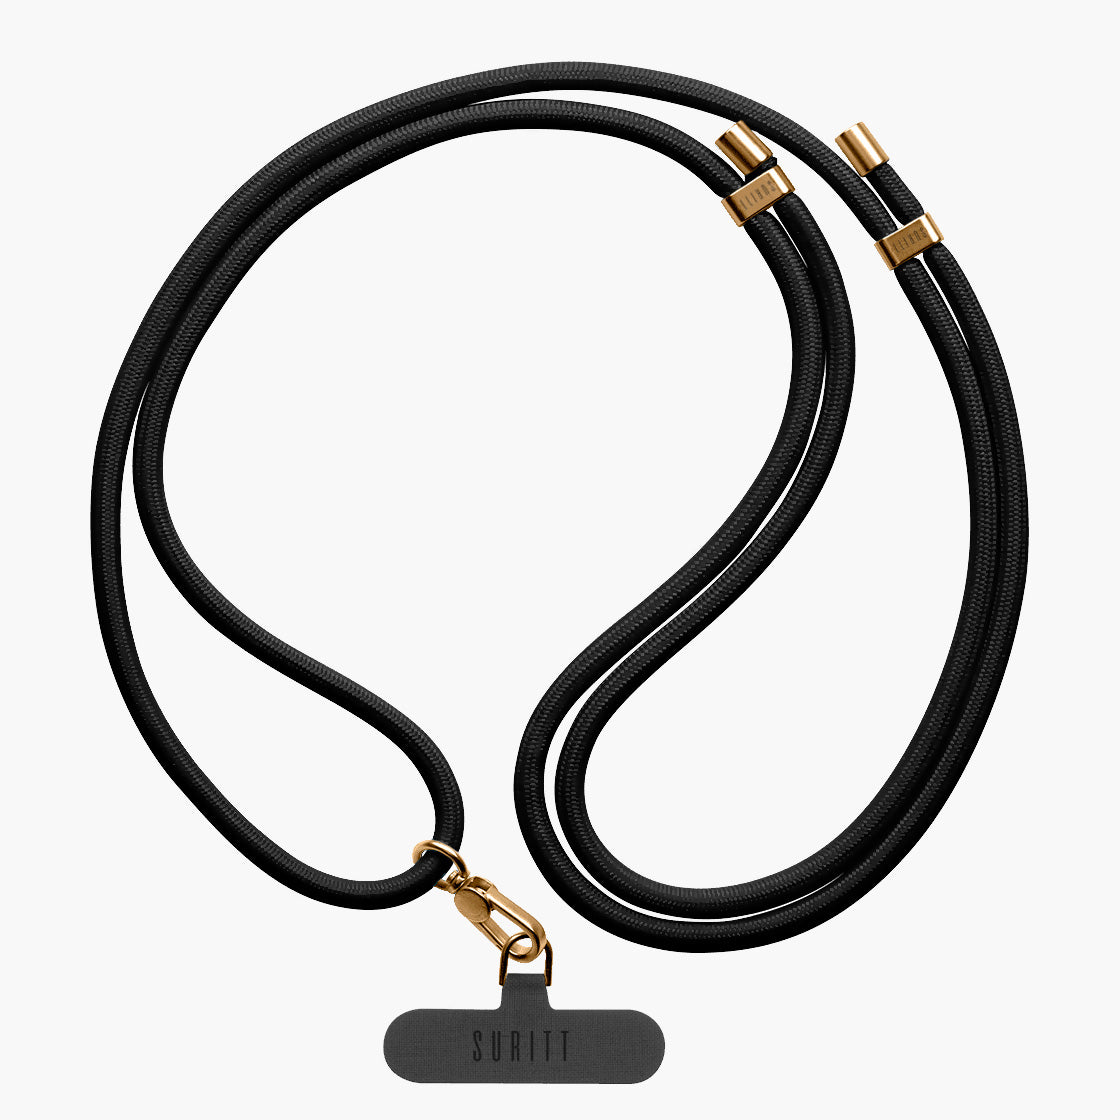 Universal Phone Necklace Black – Suritt